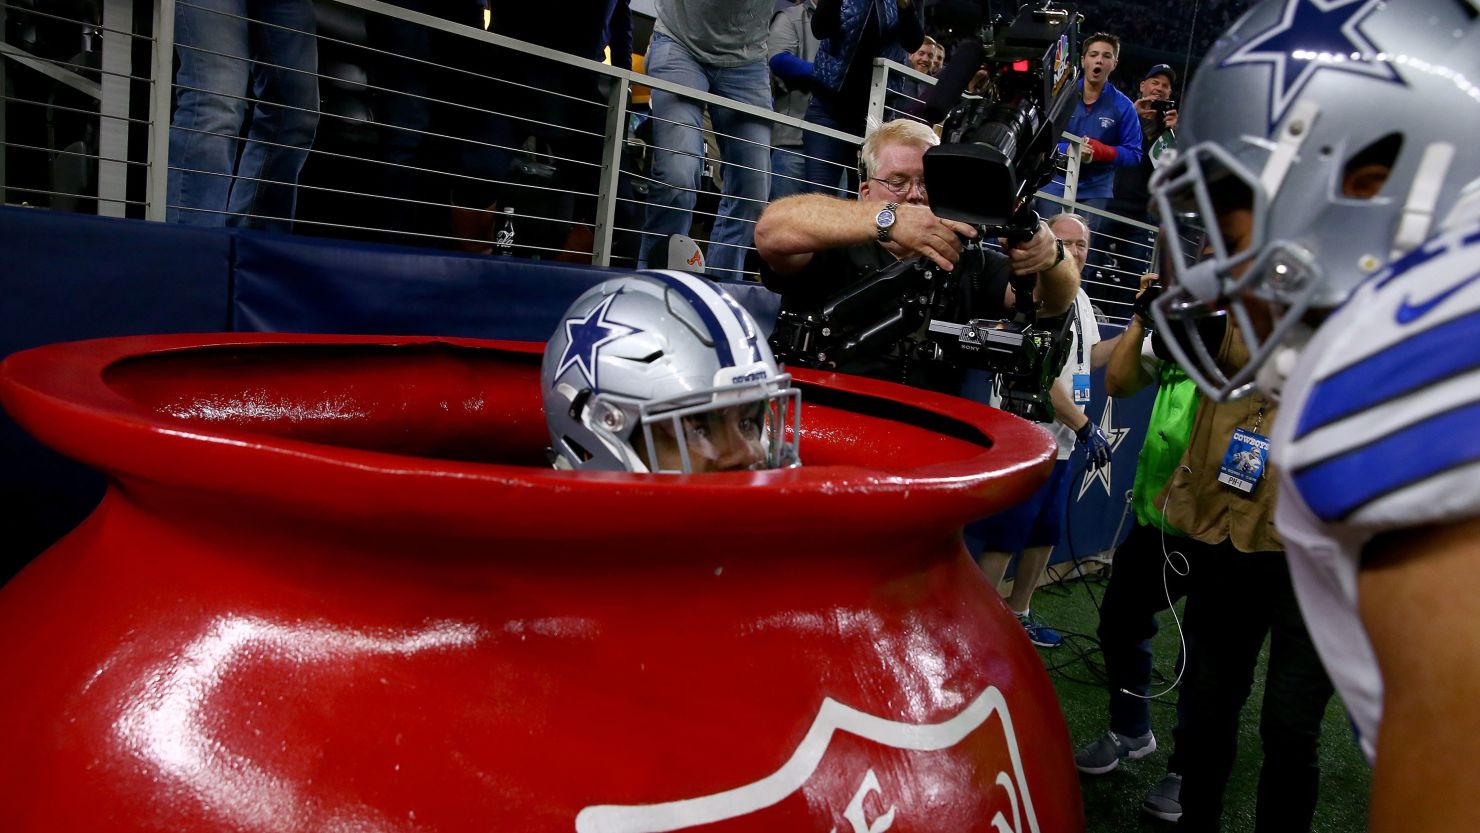 The Dallas Cowboys' Ezekiel Elliott celebrates in a Salvation Army kettle after scoring a touchdown Sunday.